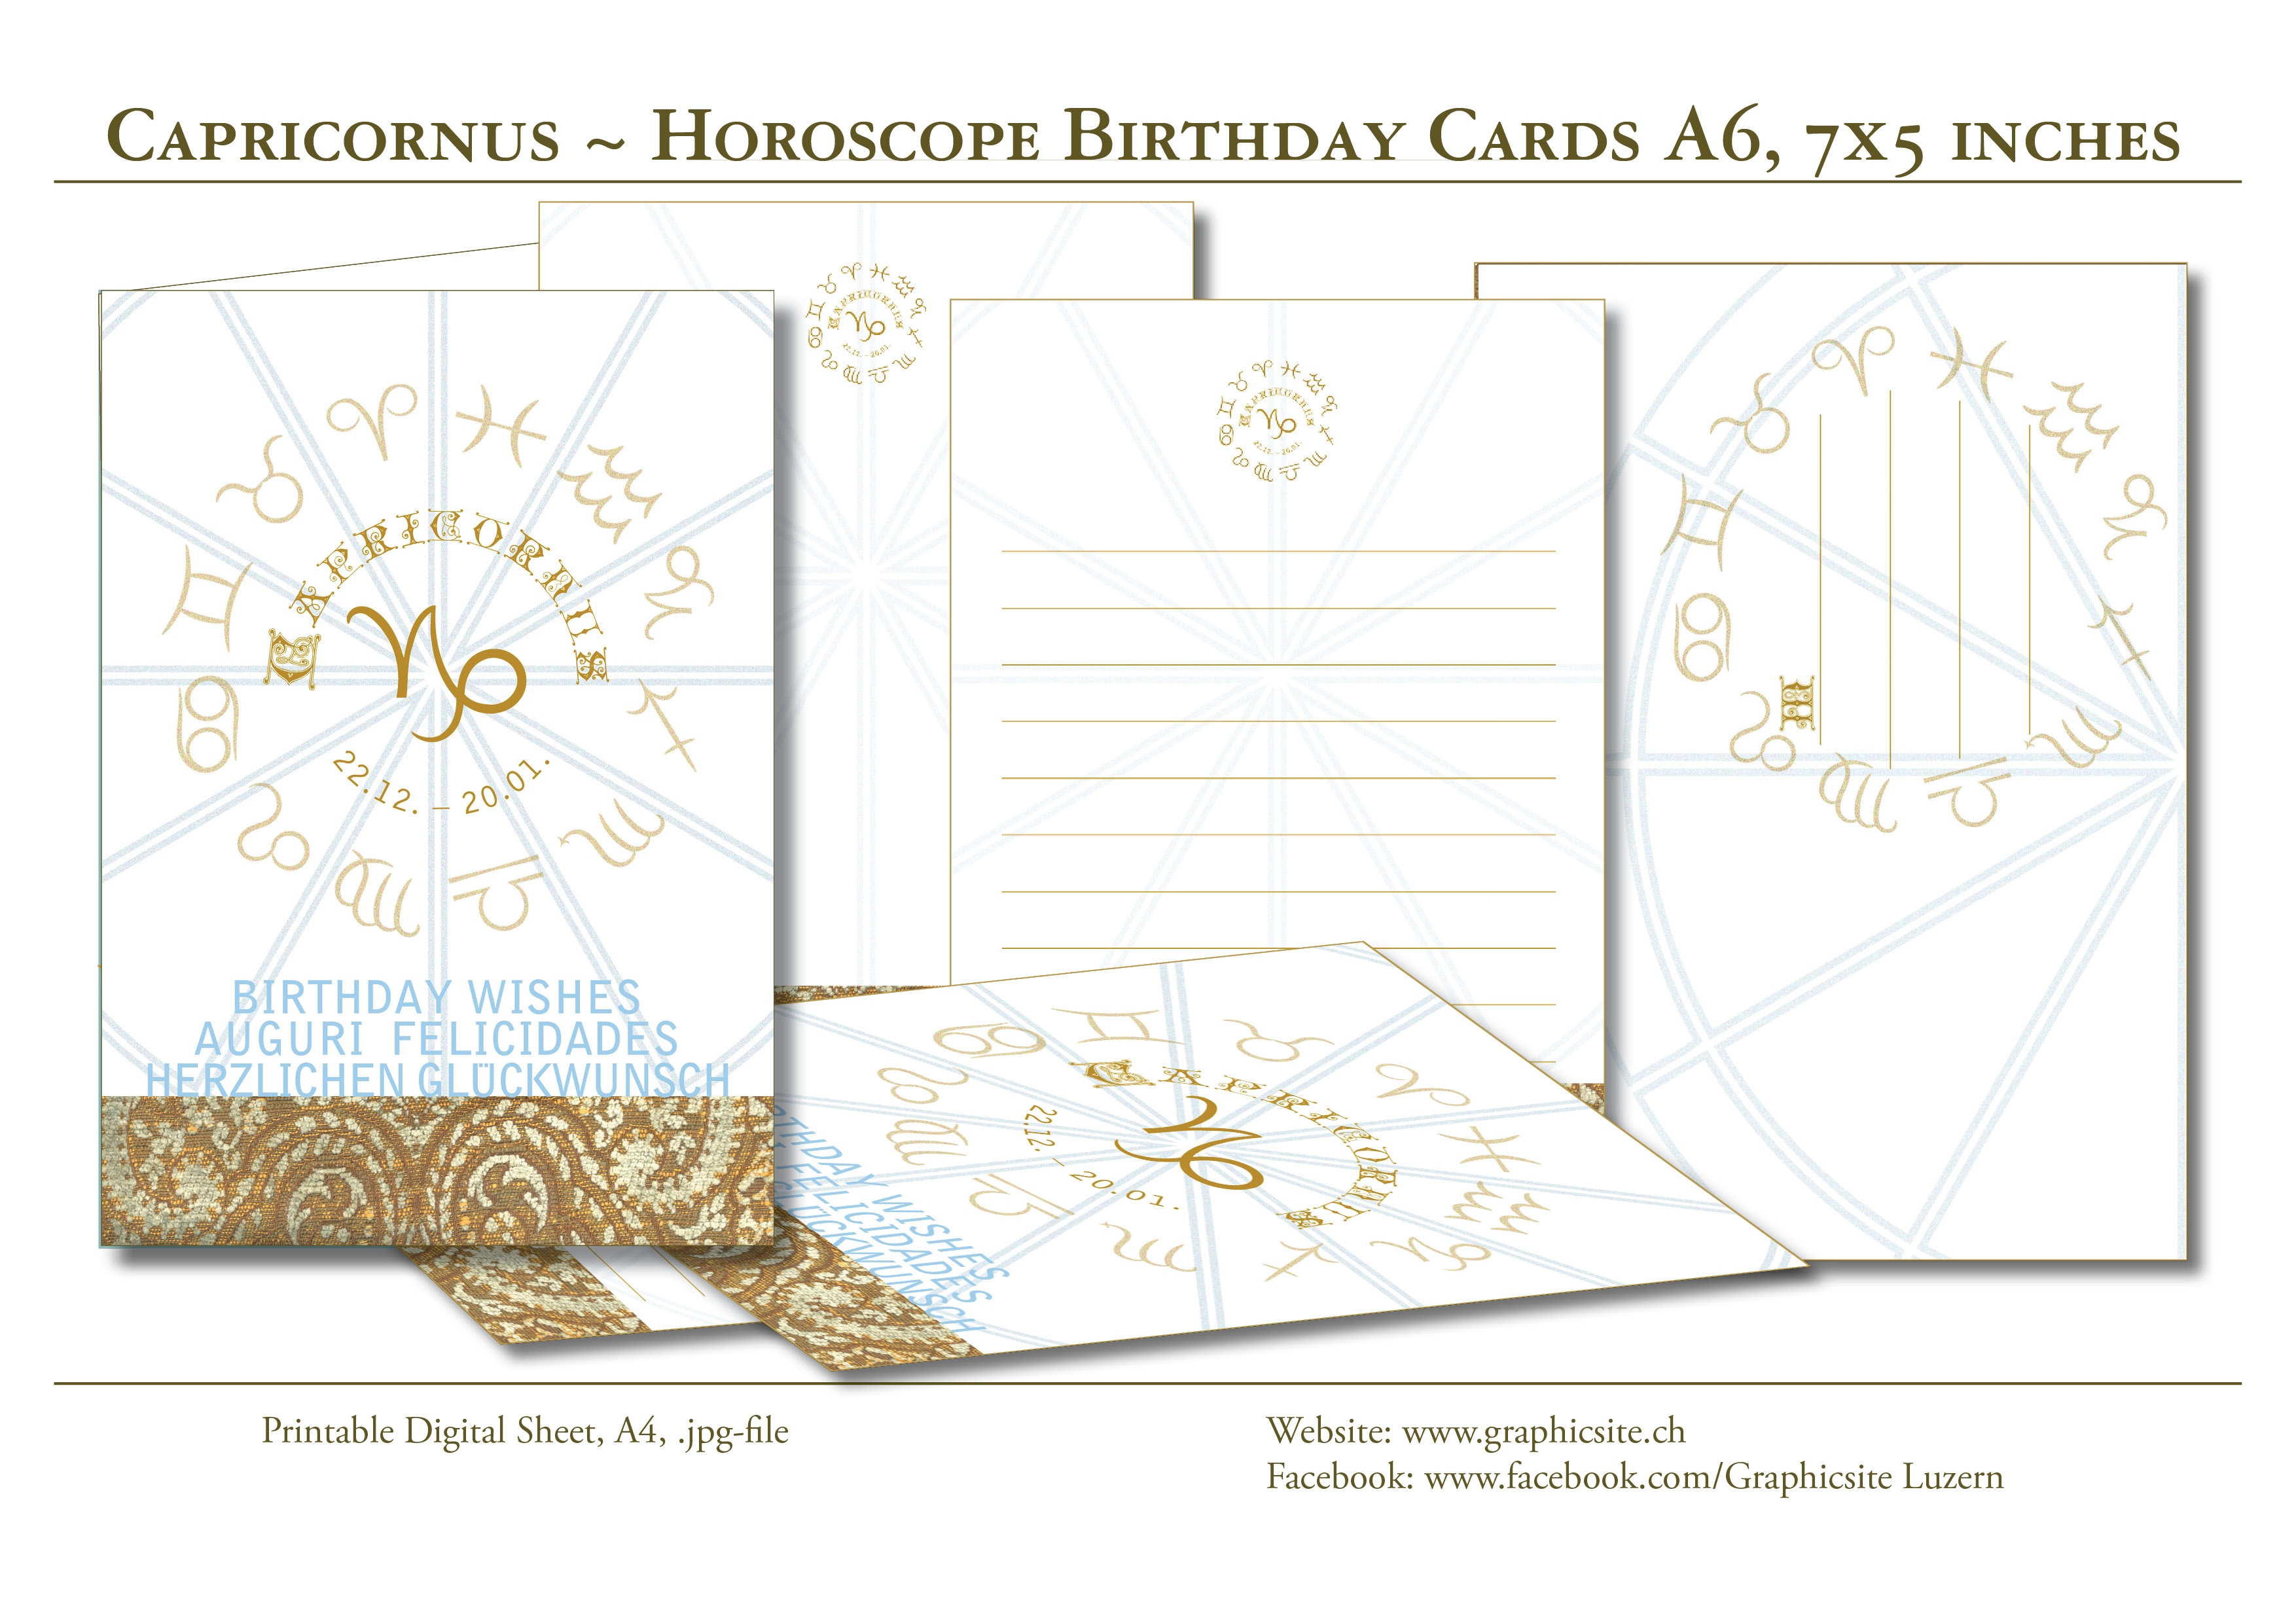 Printable Digital Sheets - Birthday Card Collection - Horoscope - Zodiac - Capricornus A6 - GraphicDesign, Luzern